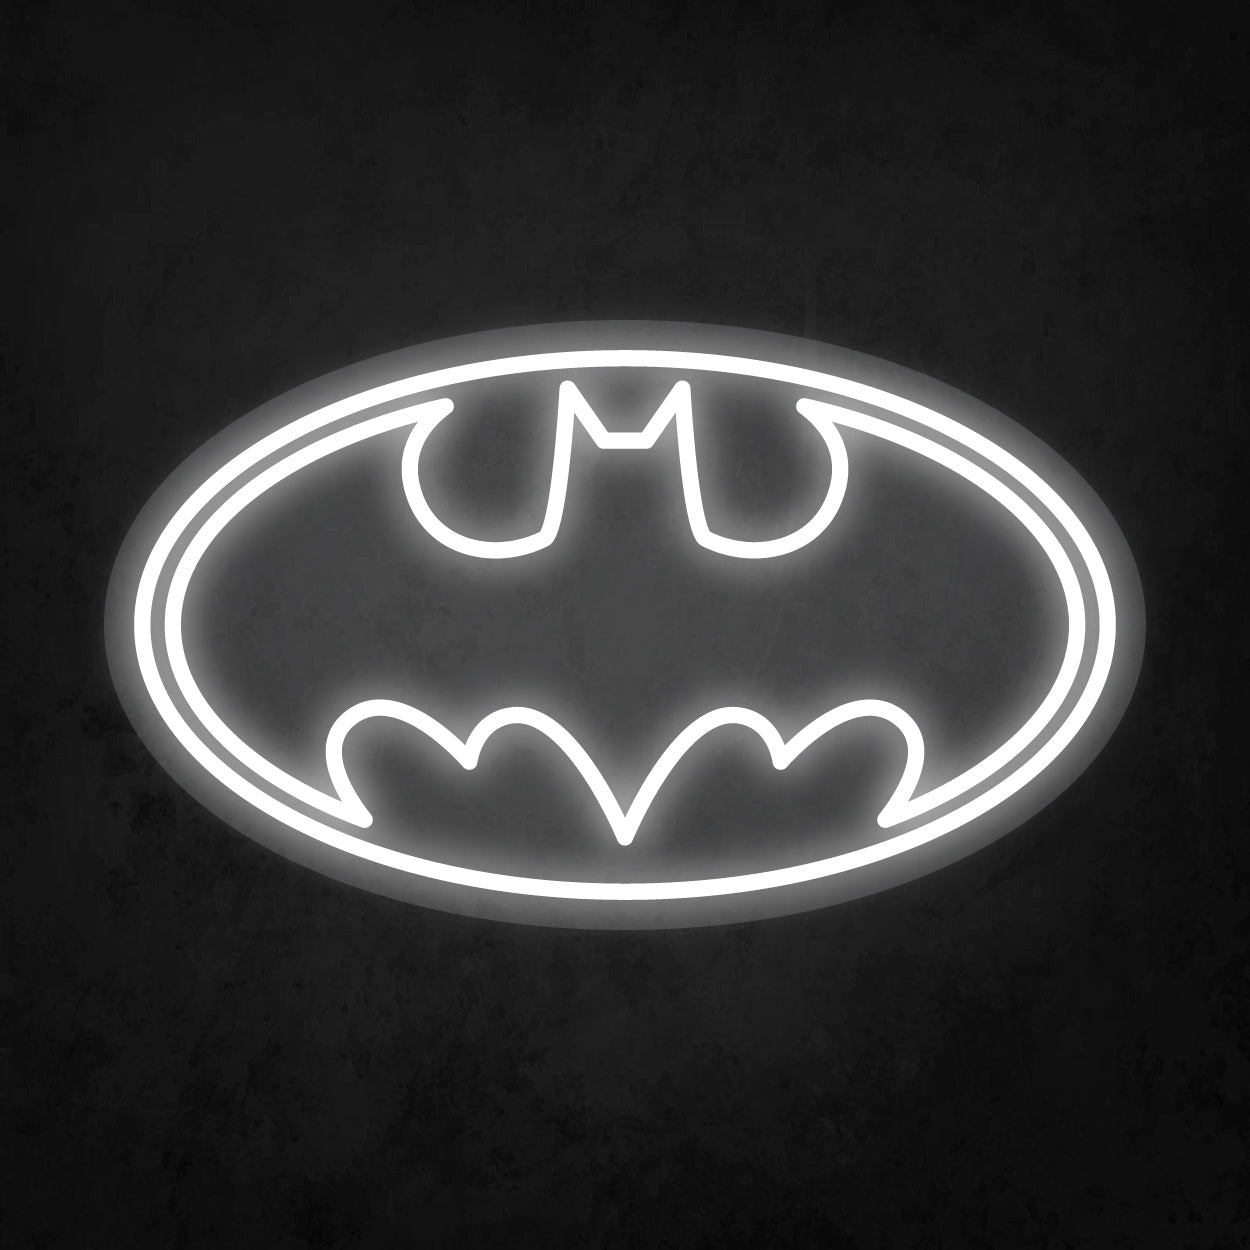 LED Neon Sign - Batman Emblem